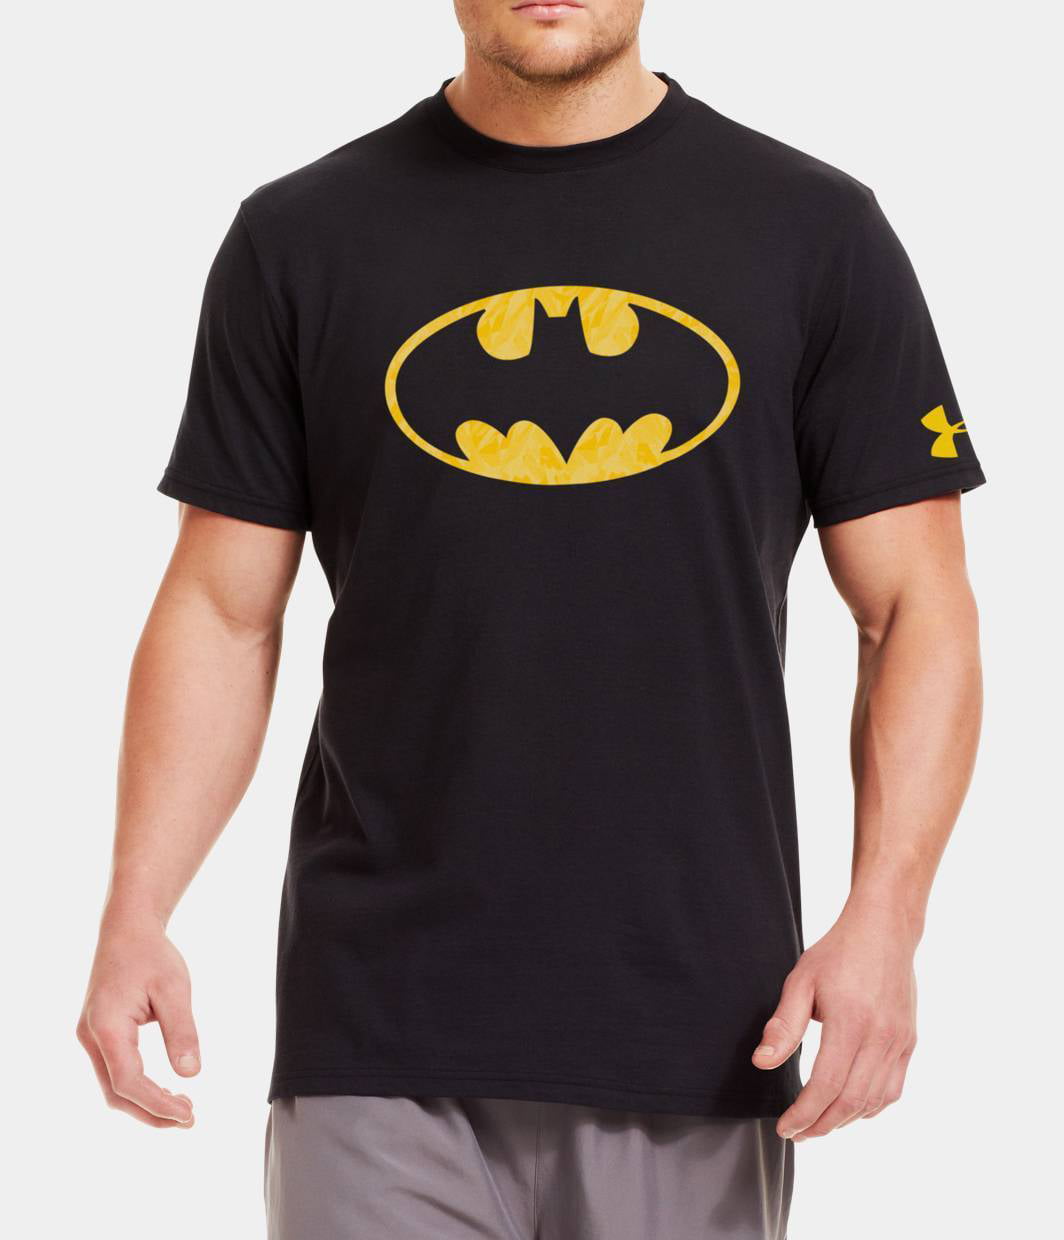 komen Archeologie uitvinding Under Armour Men's Alter Ego Patterned Batman T-Shirt Small Black 1249769 -  Walmart.com